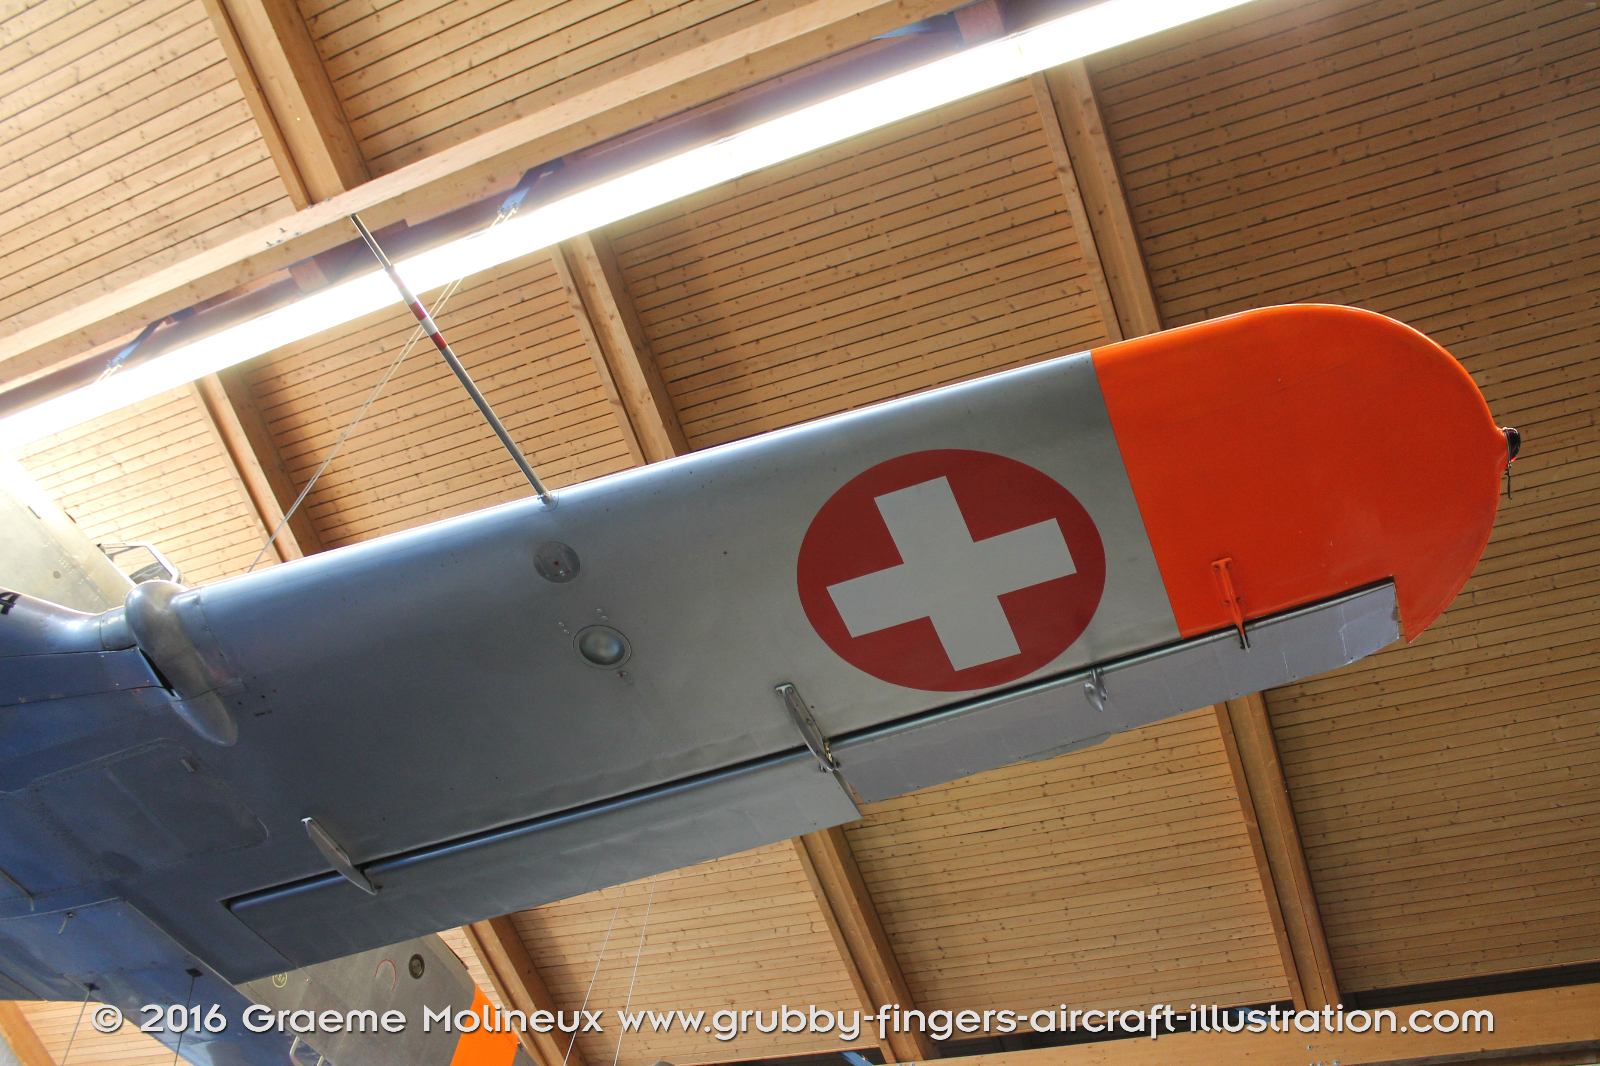 PILATUS_P-2_U-134_Swiss_Air_Force_Museum_2015_11_GrubbyFingers